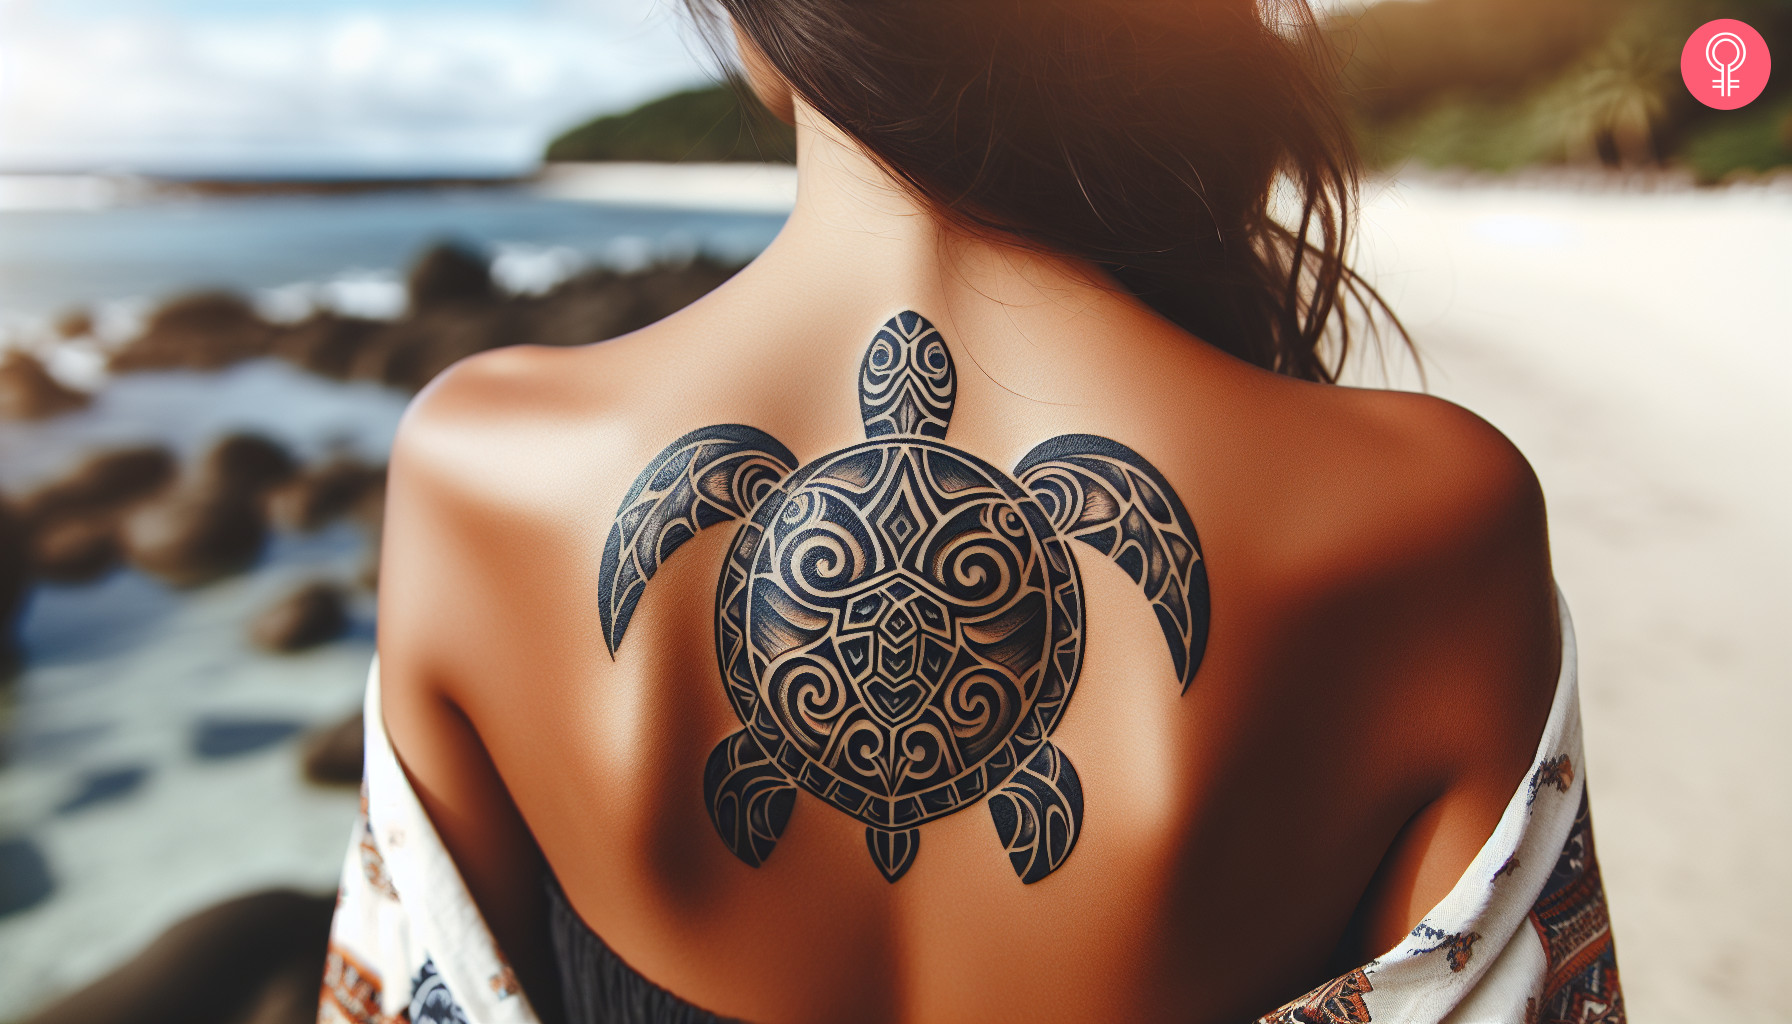 Spinal maori turtle tattoo on a woman